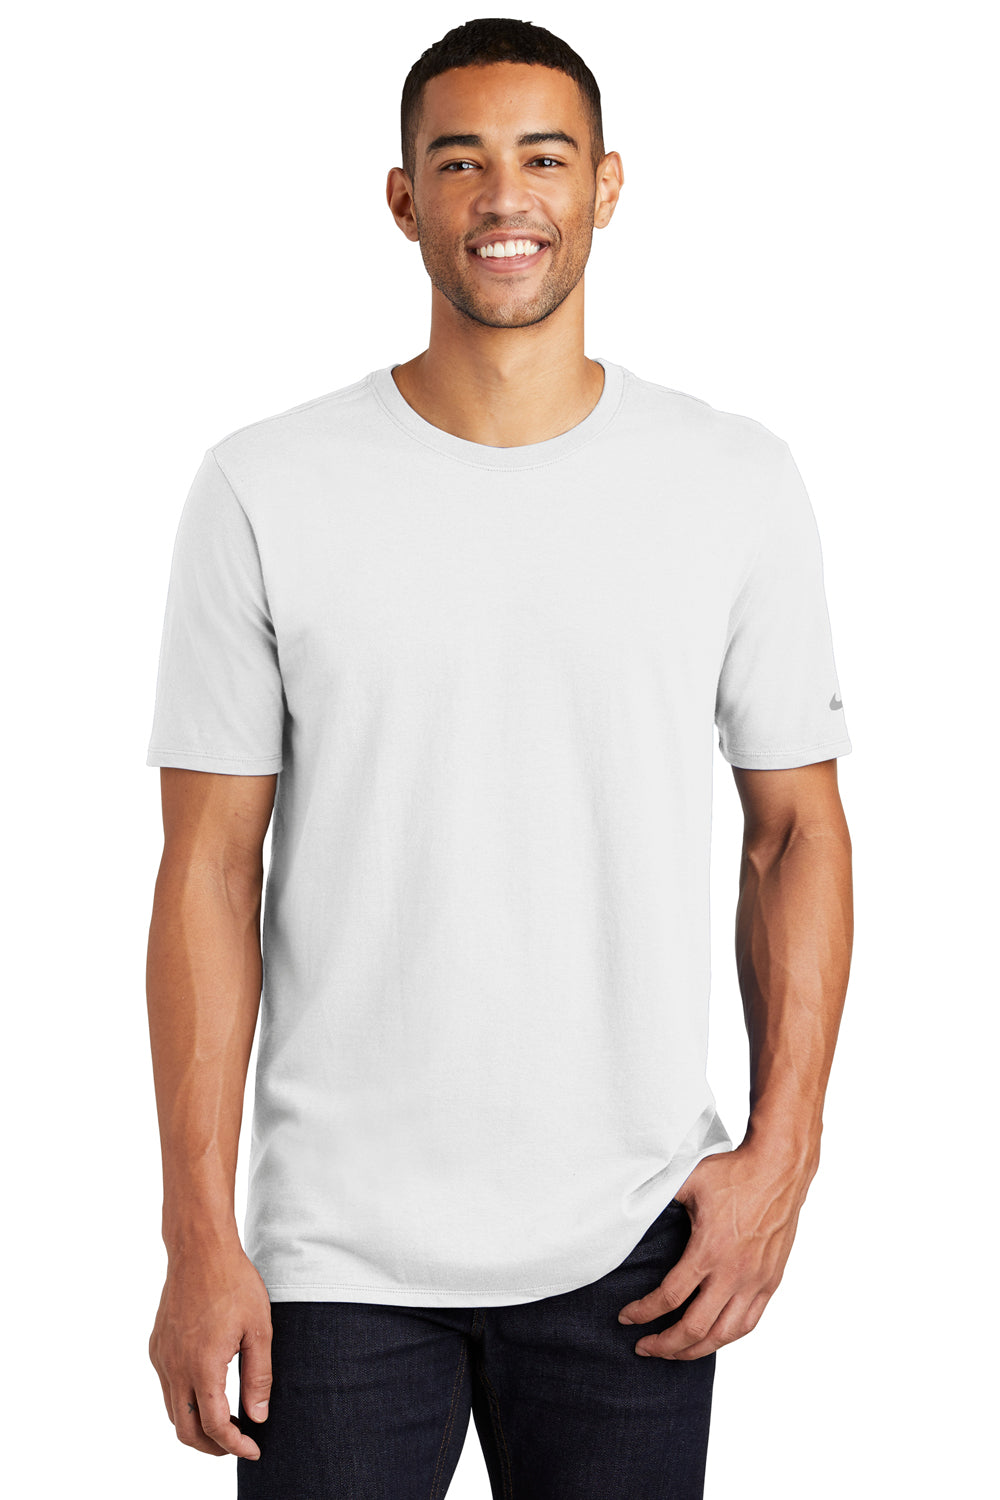 Nike NKBQ5233 Mens Core Short Sleeve Crewneck T-Shirt White Front